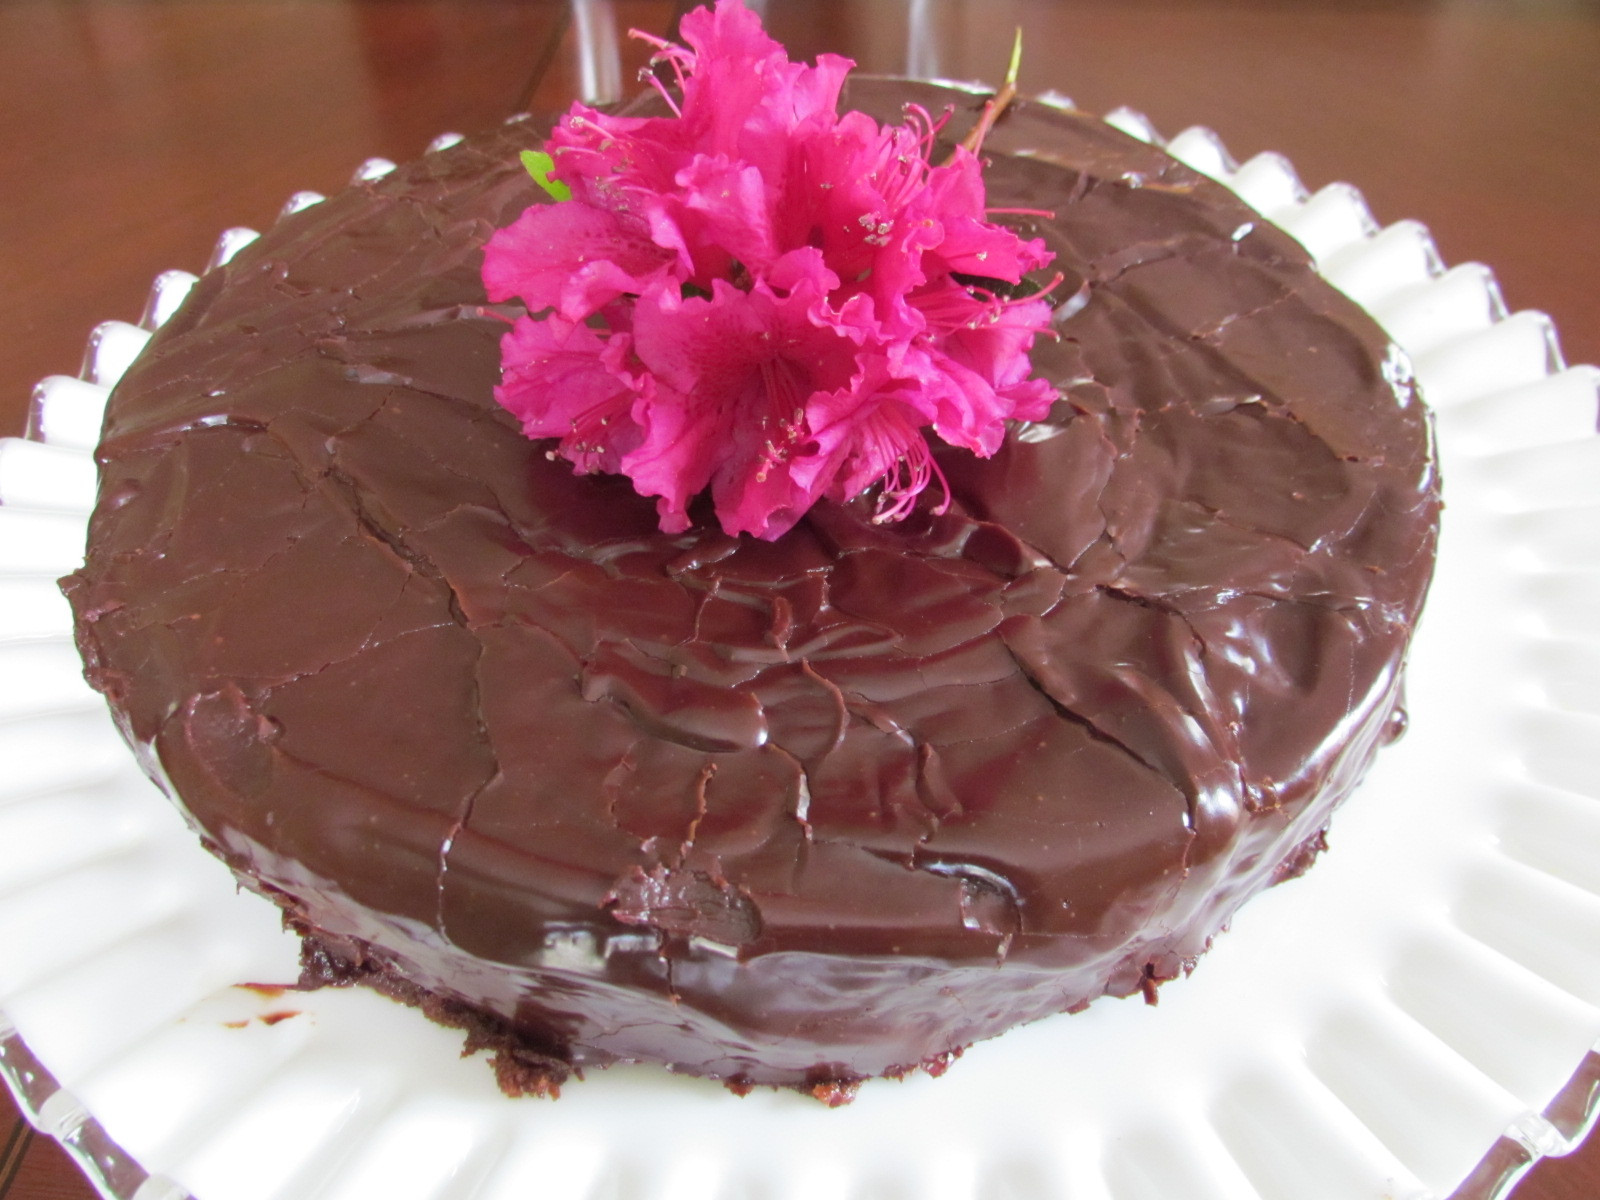 Flourless Chocolate Cake Ina Garten
 Flourless Chocolate Cake Adapted from Ina Garten